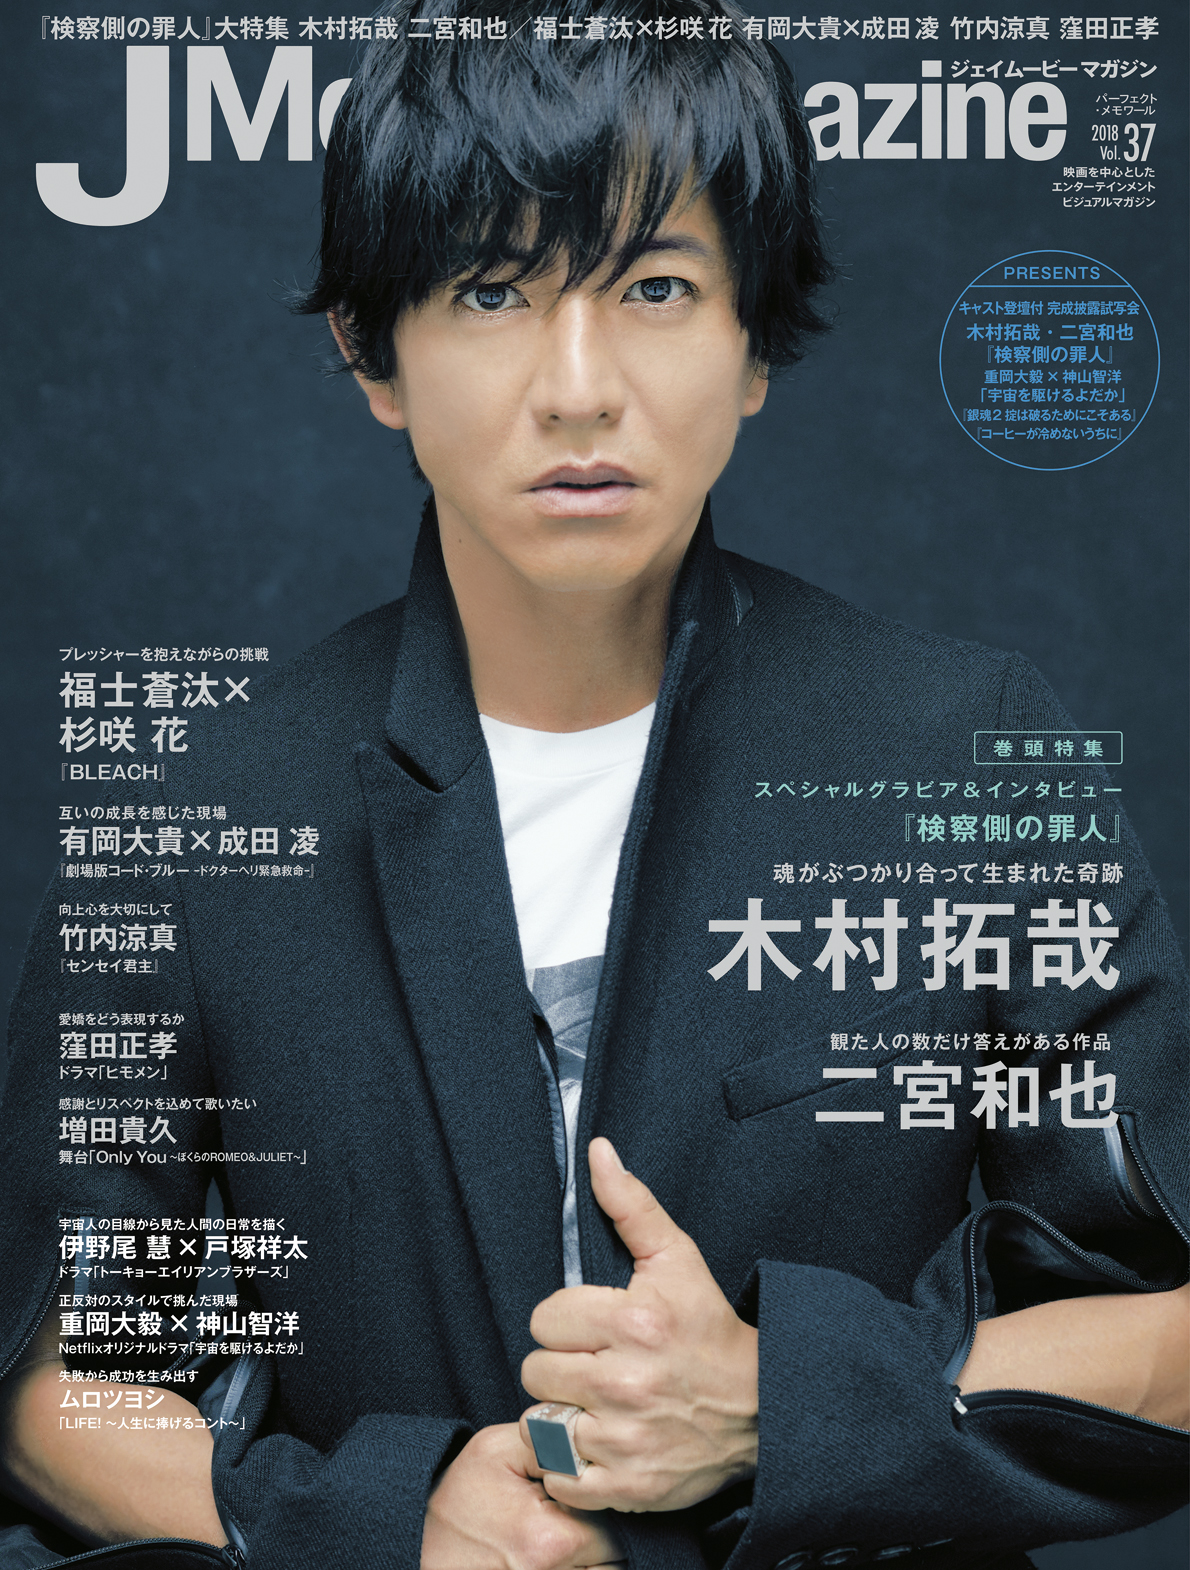 J Movie Magazine ジェイムービーマガジン Vol 37 7月10日発売 株式会社リイド社のプレスリリース